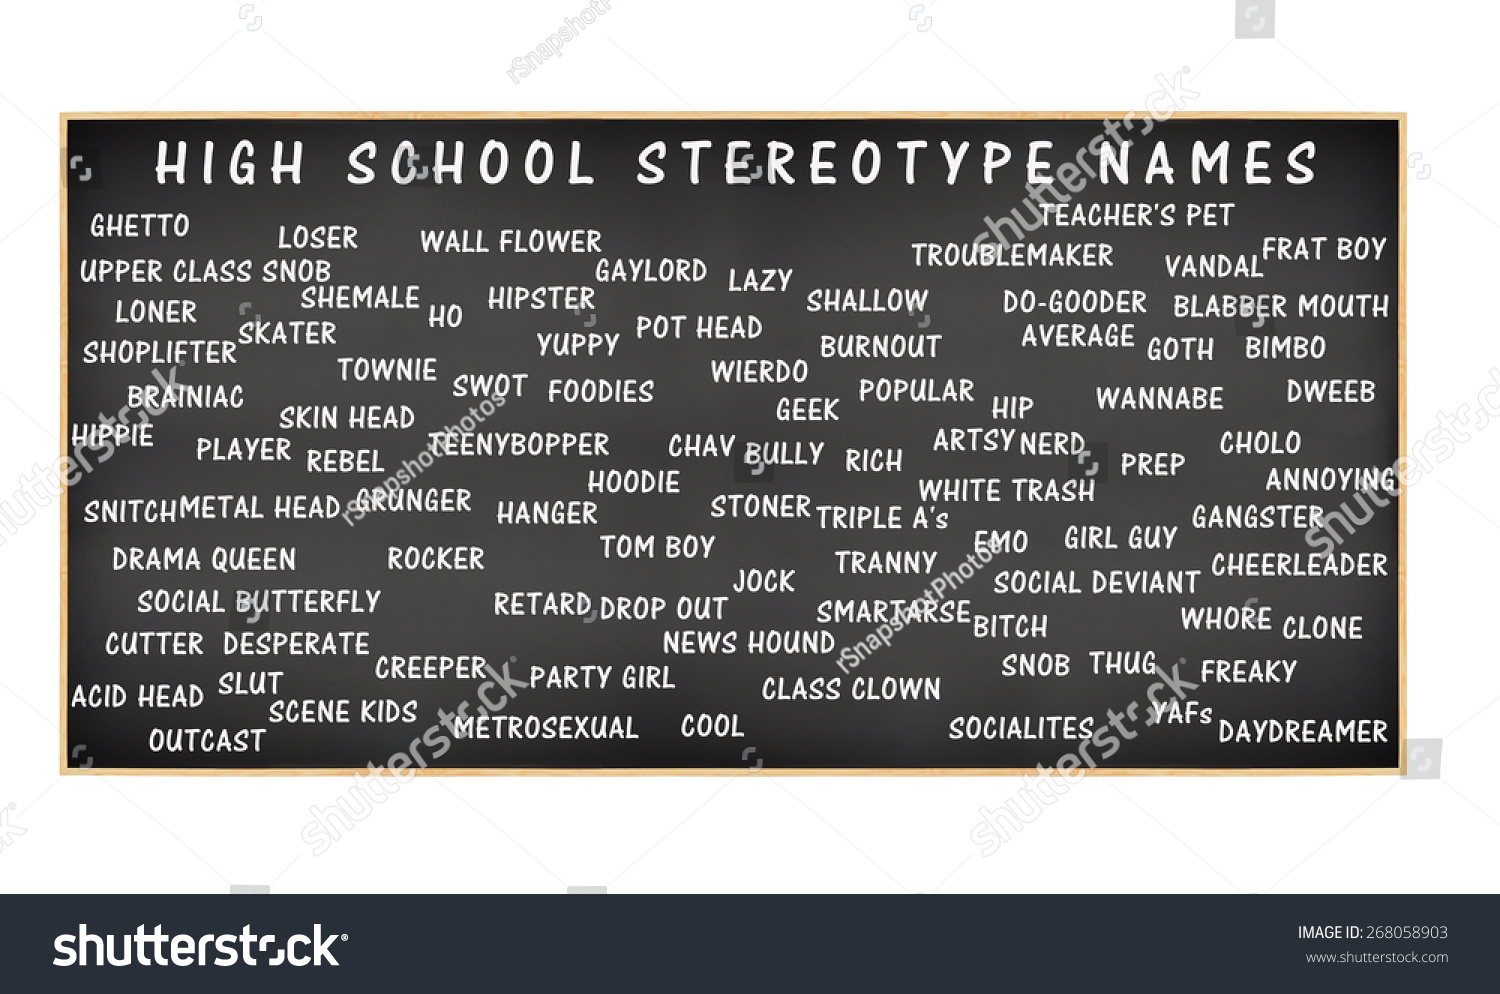 Stereotypes high school 